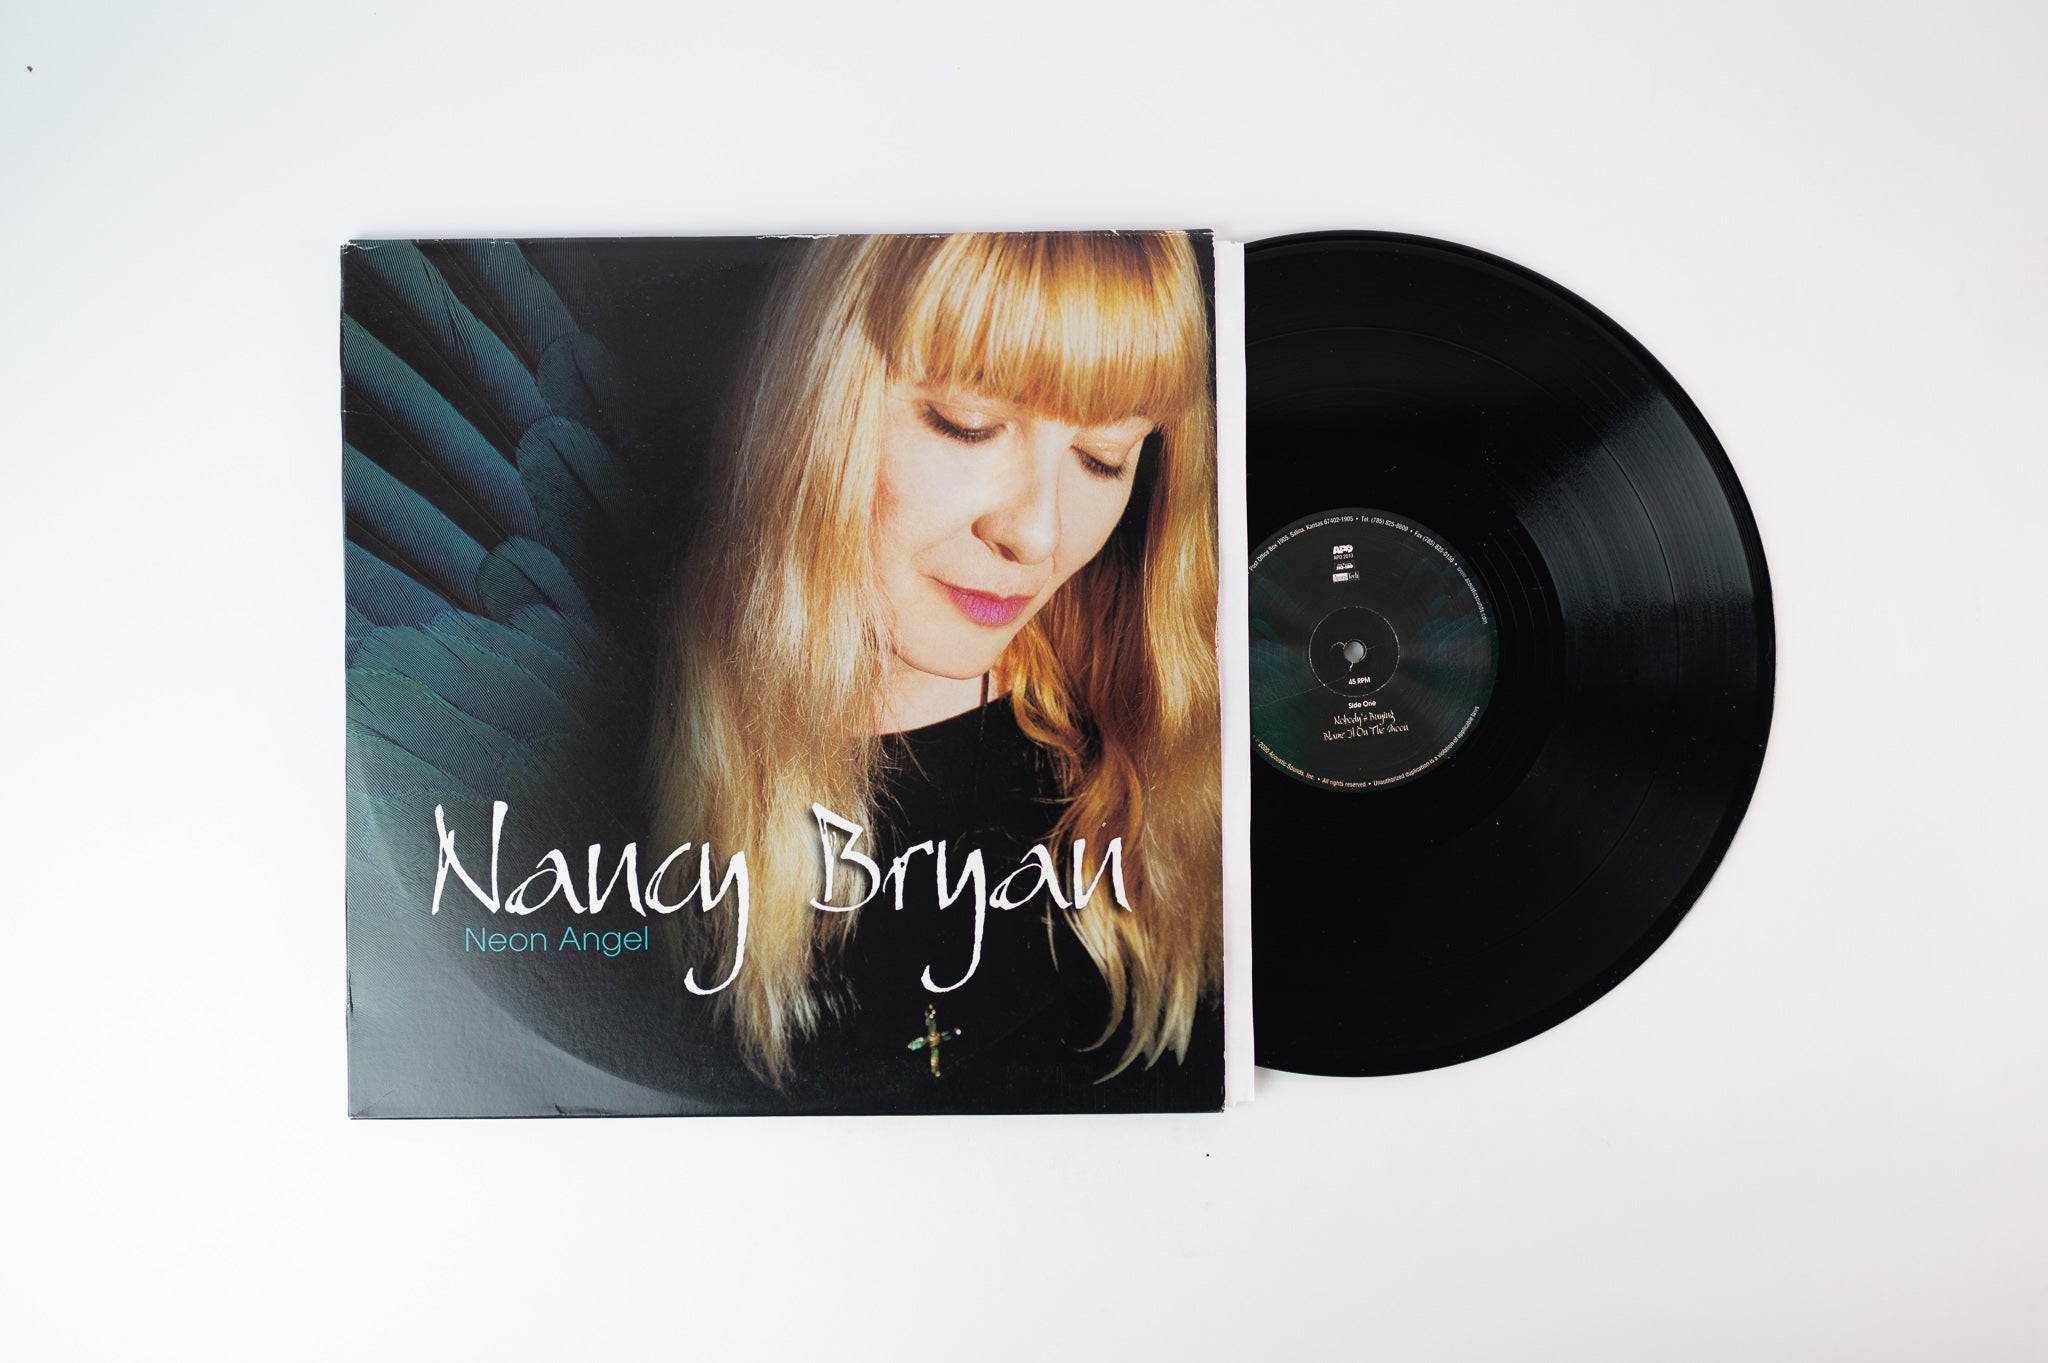 Nancy Bryan - Neon Angel on APO Records